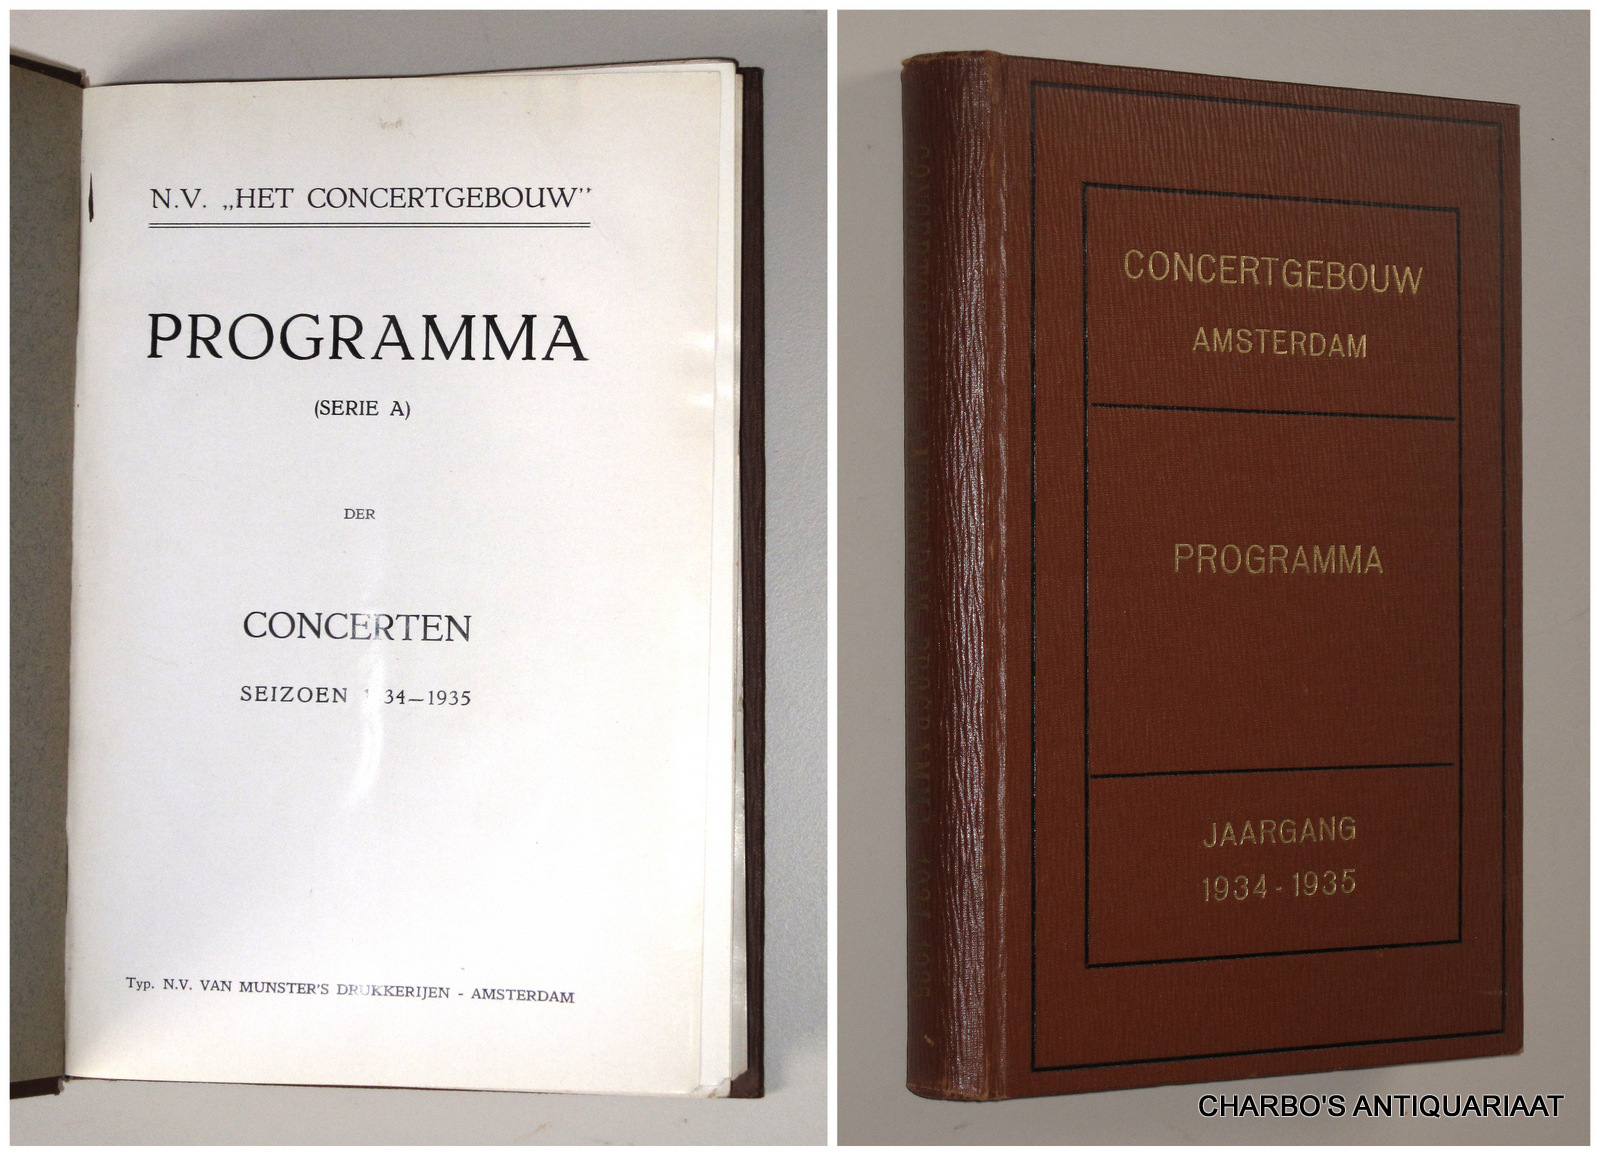 CONCERTGEBOUW, N.V. HET, -  Programma (serie A) der concerten seizoen 1934-1935.